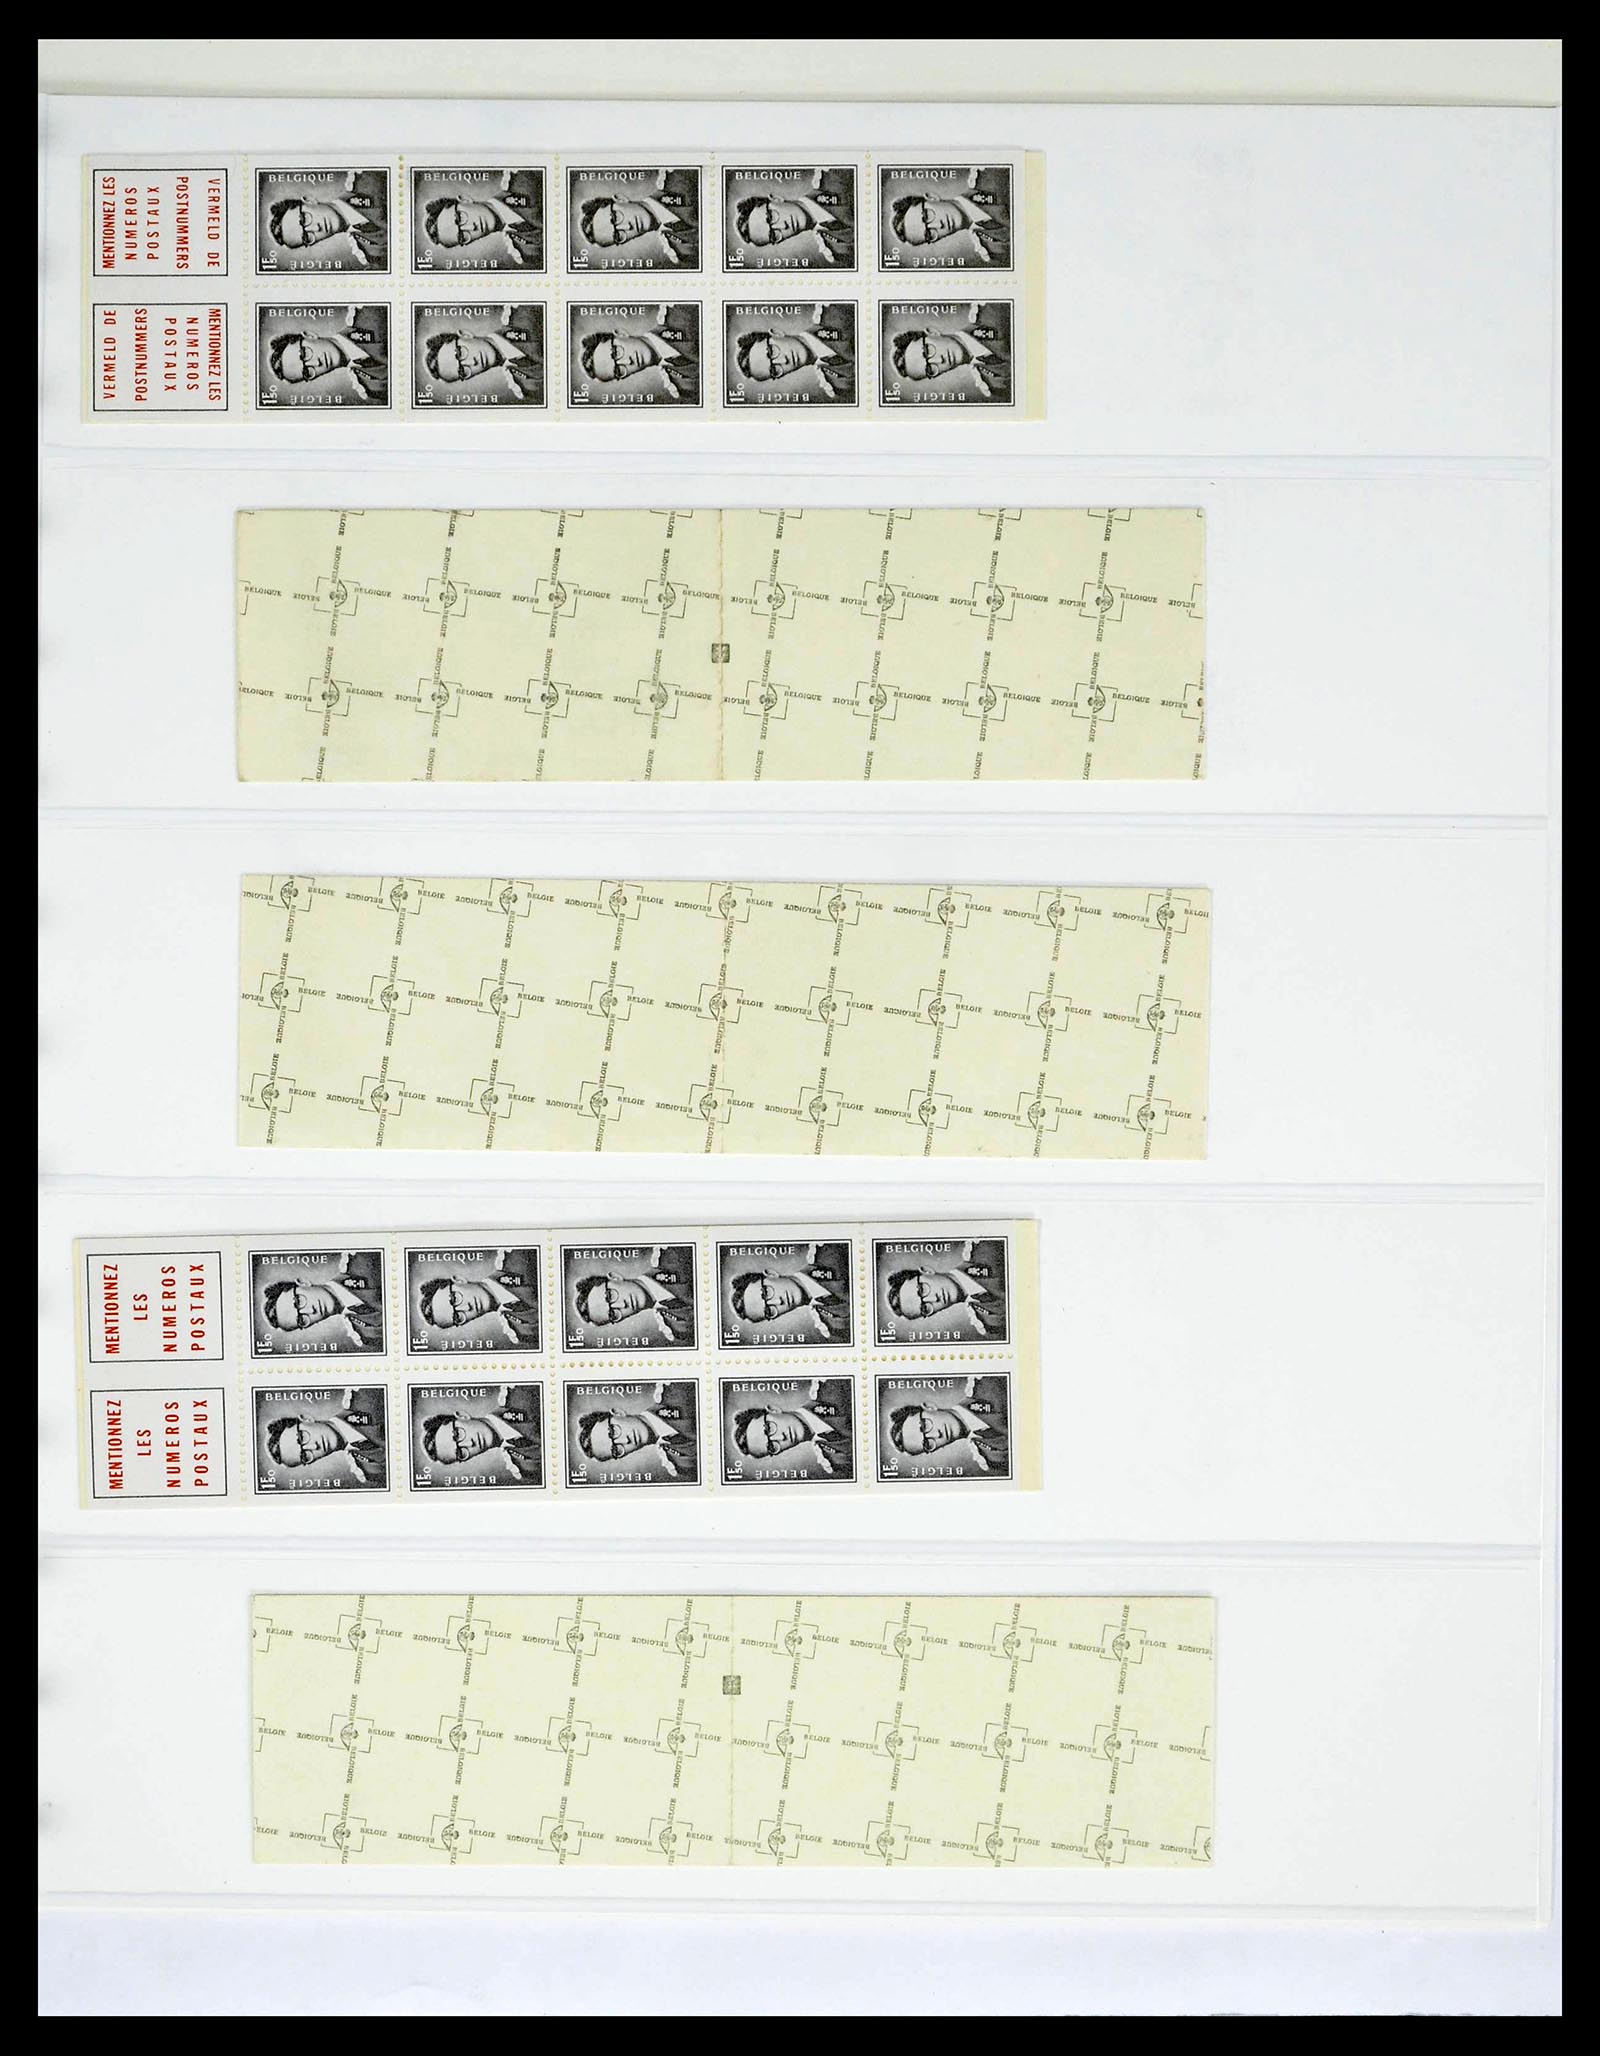 39229 0057 - Stamp collection 39229 Belgium Boudewijn with glasses 1952-1975.